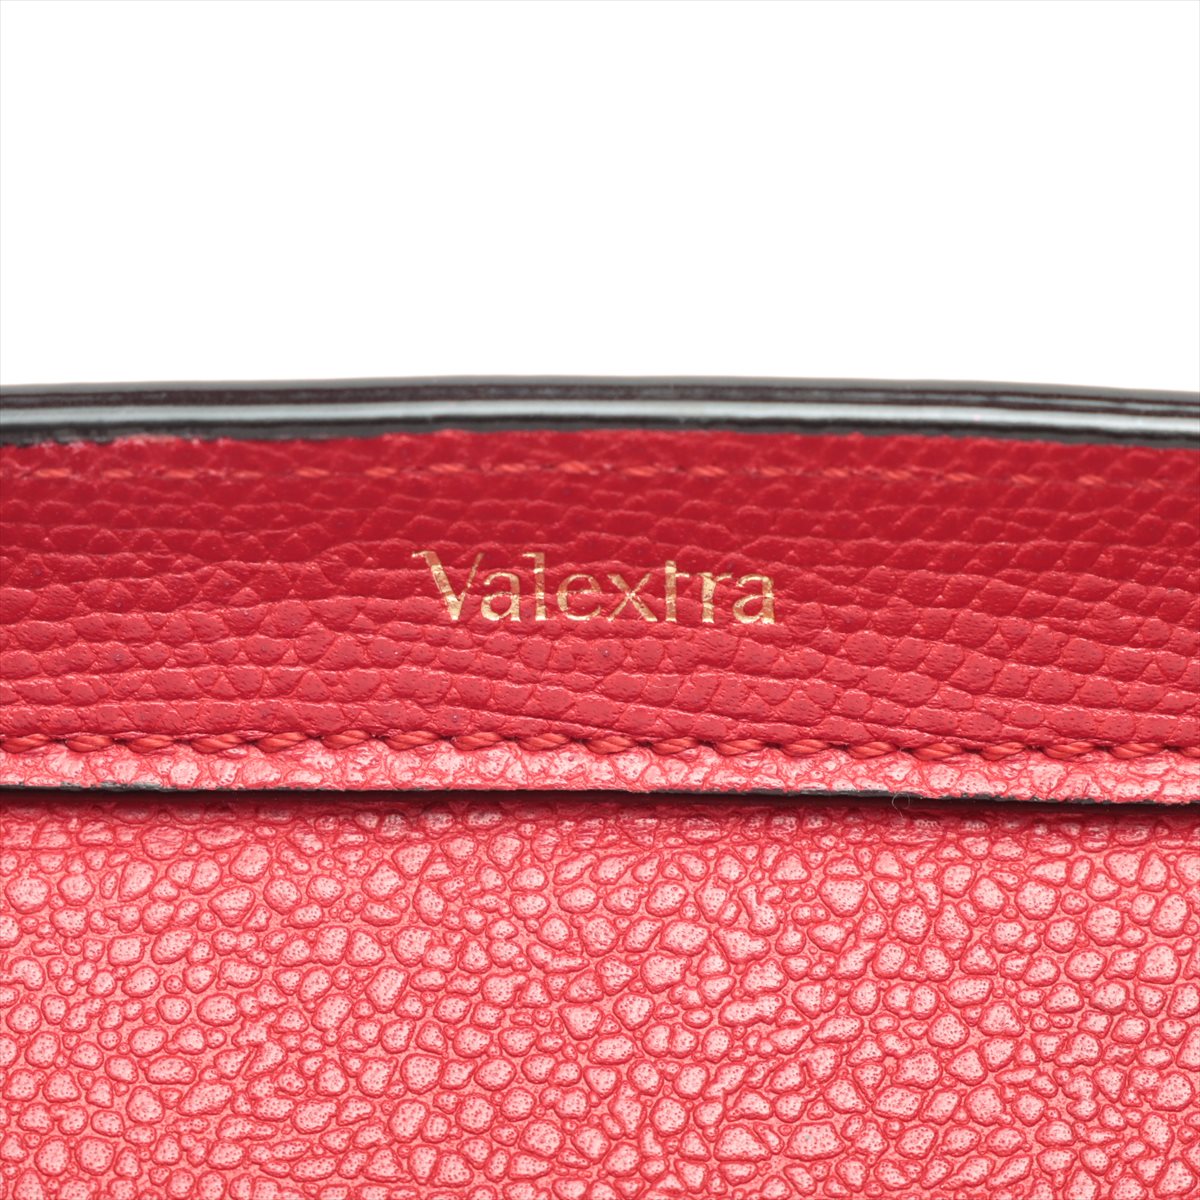 Valextra Triennale Leather 2way handbag Red